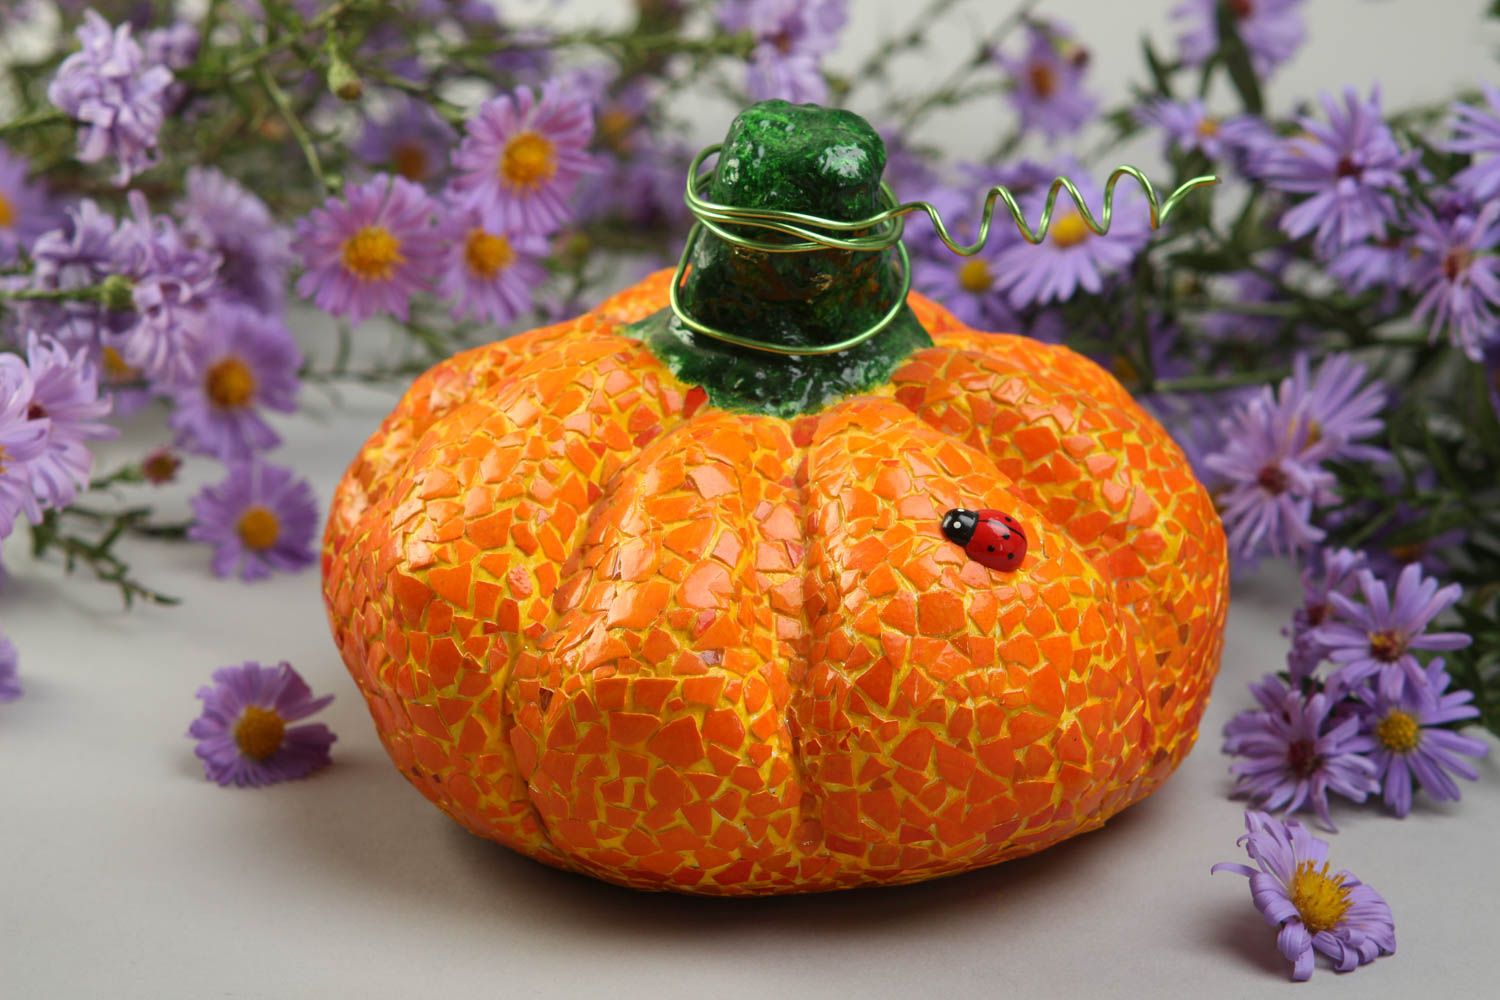 Cute designer toy interesting unusual accessories lovely handmade pumpkin photo 1